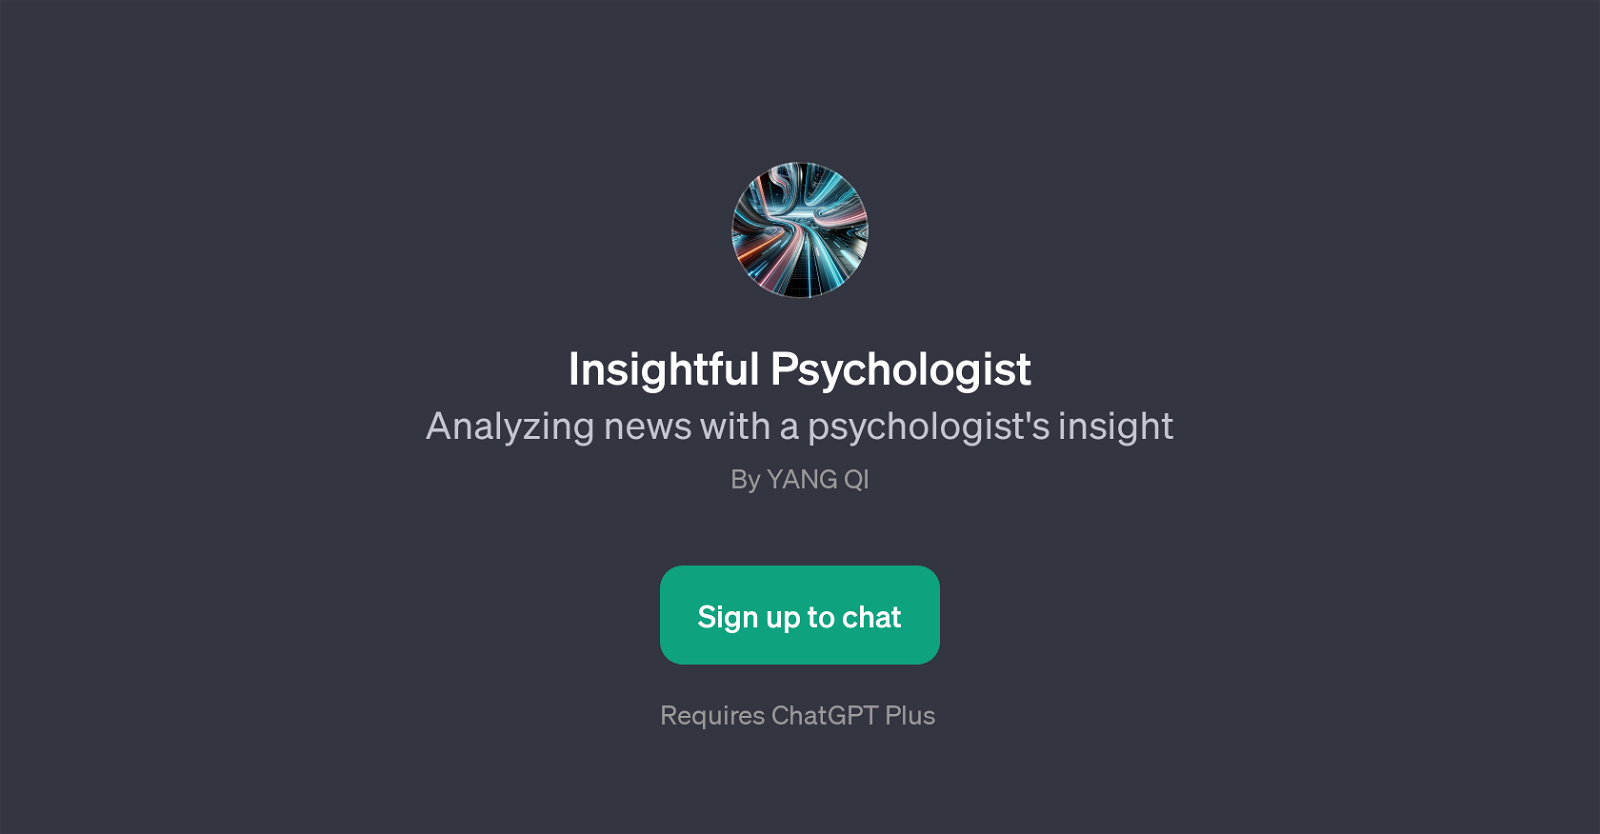 Insightful Psychologist website